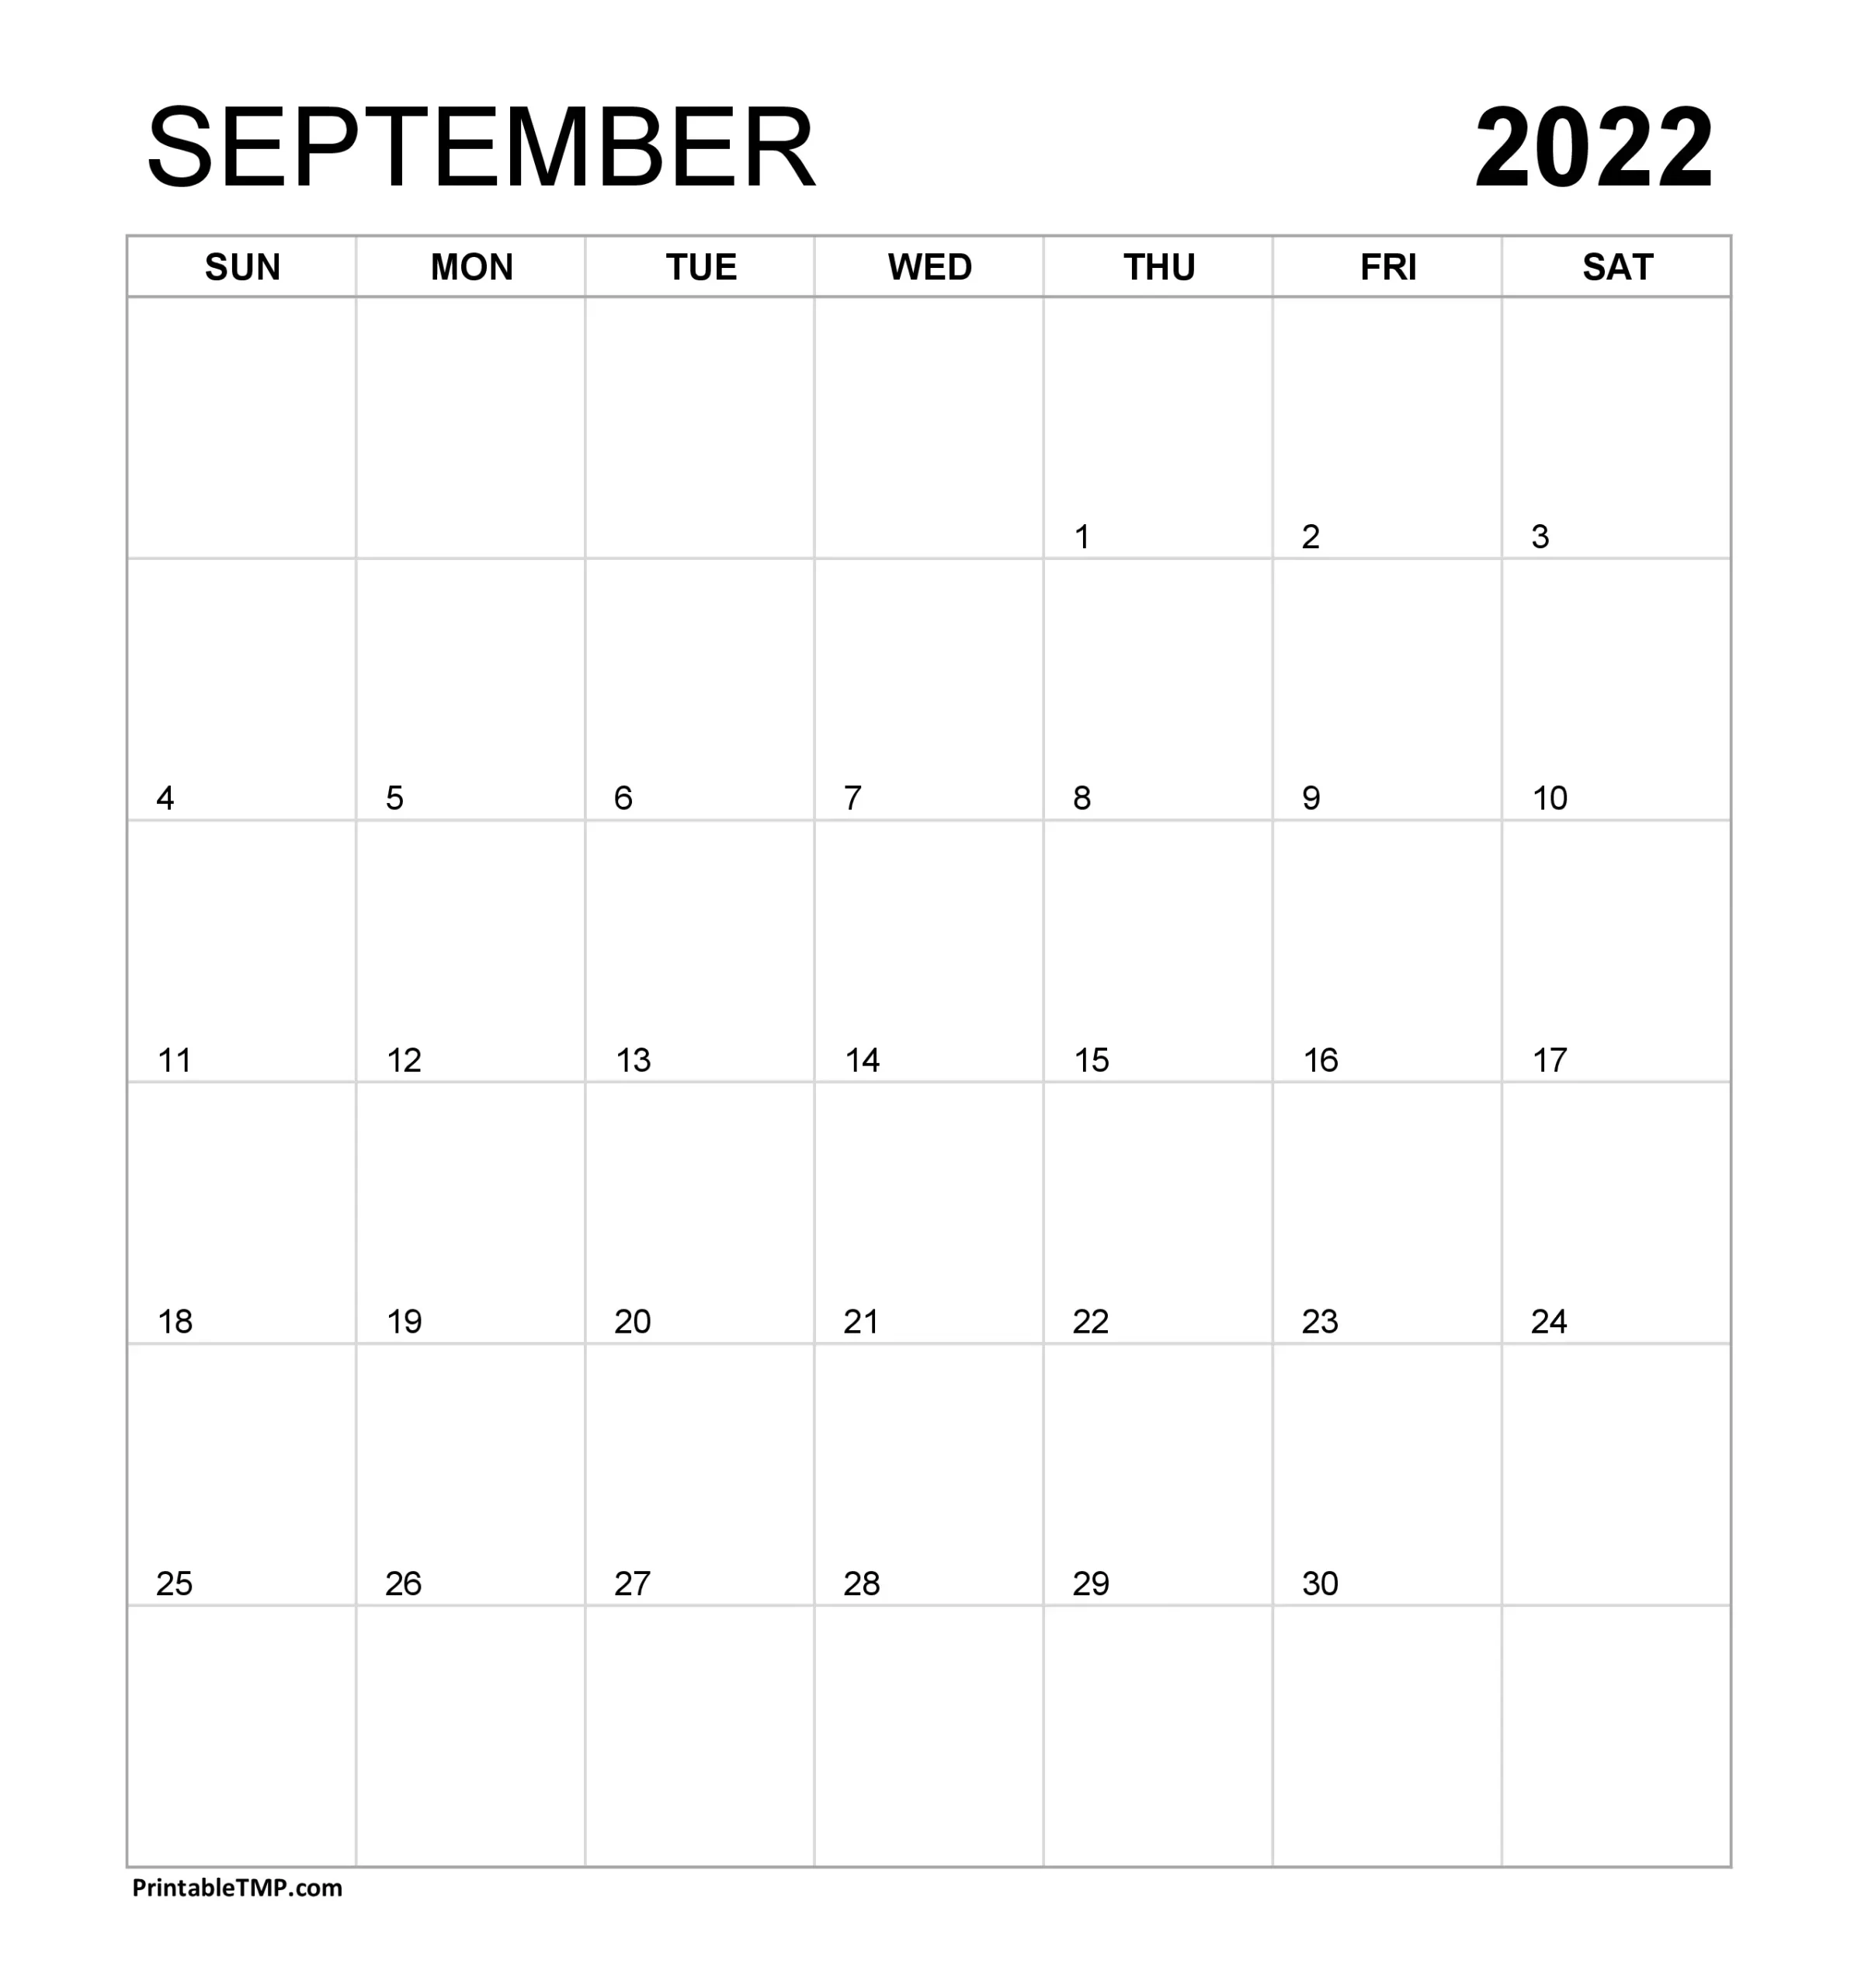 September 2022 Calendar Template Free Download in Vertical Format